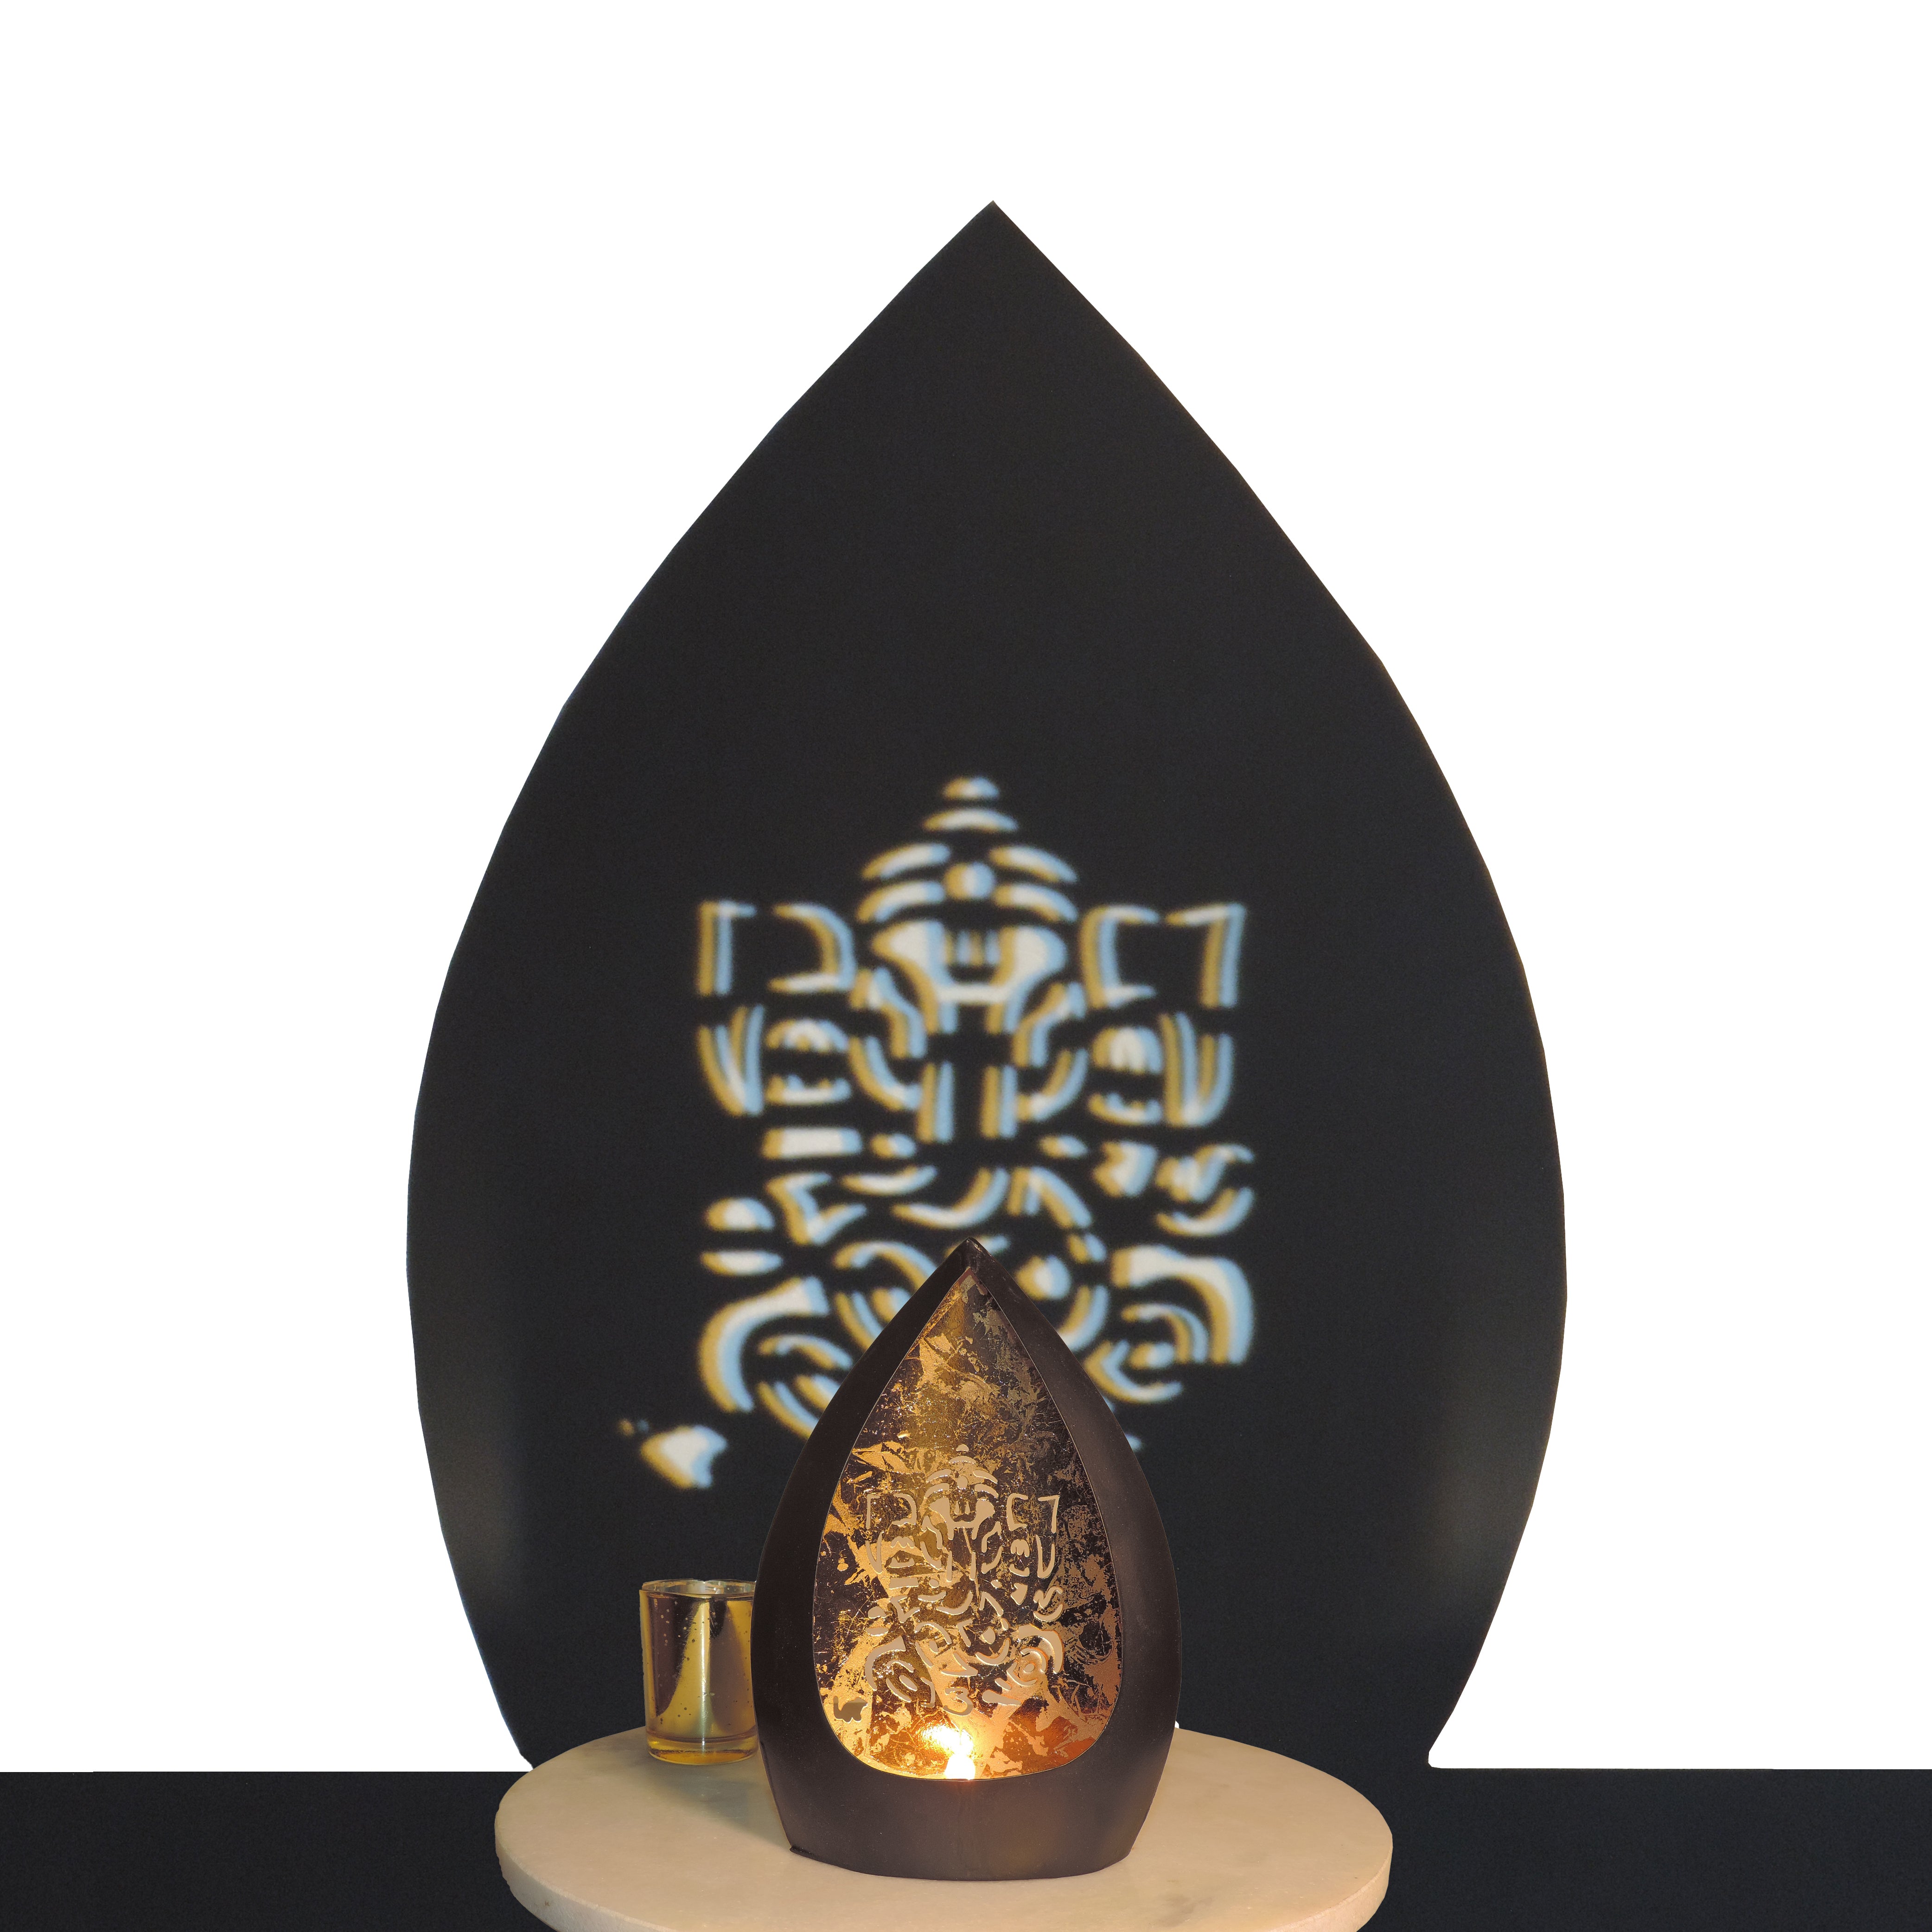 Chiragh Collection - Ganesh Set of 2 Votives with tea light - Black & Gold